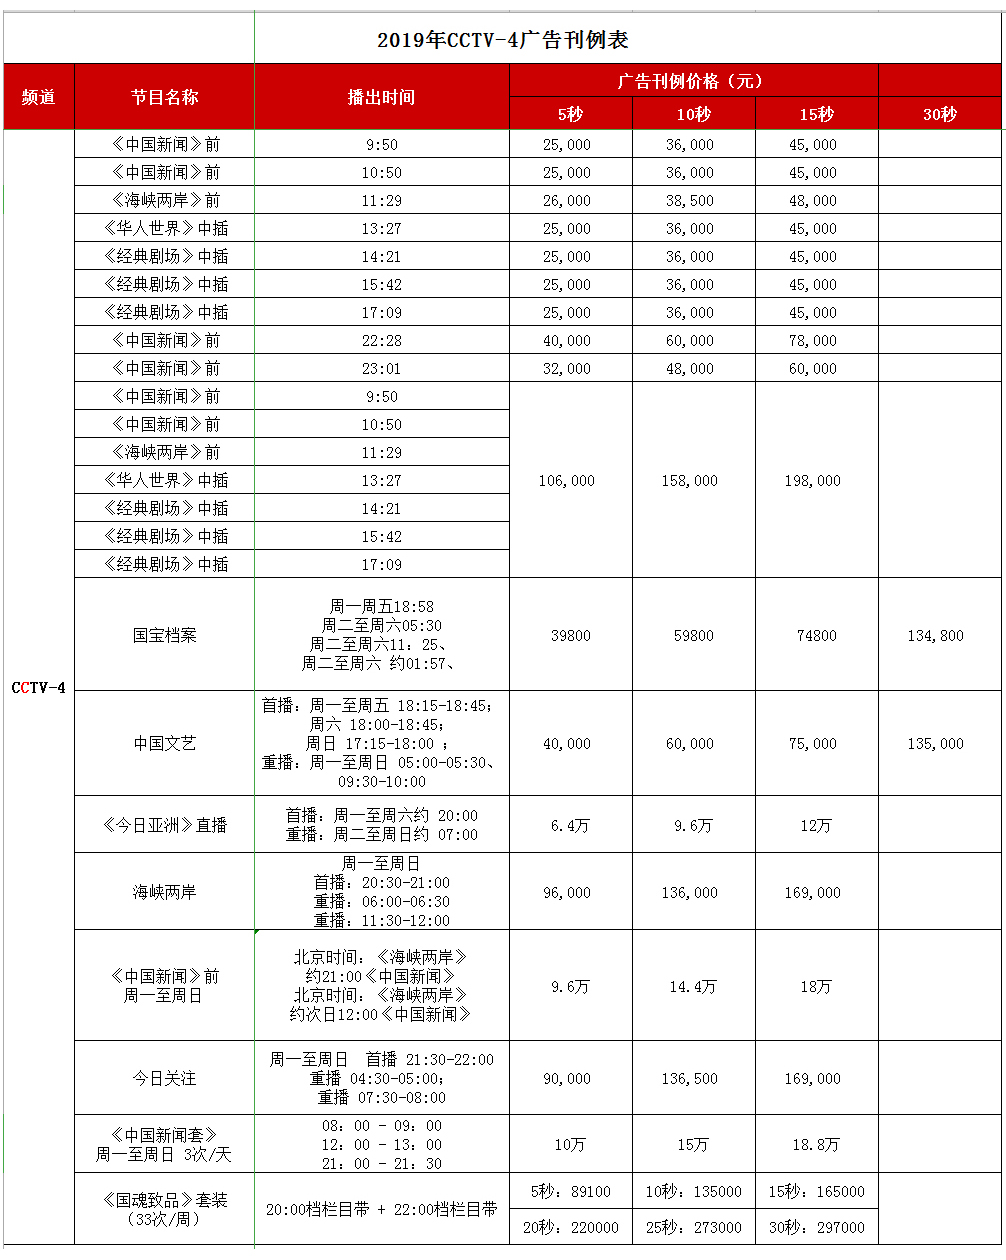 CCTV-4中文国际频道 2019年广告刊例价格